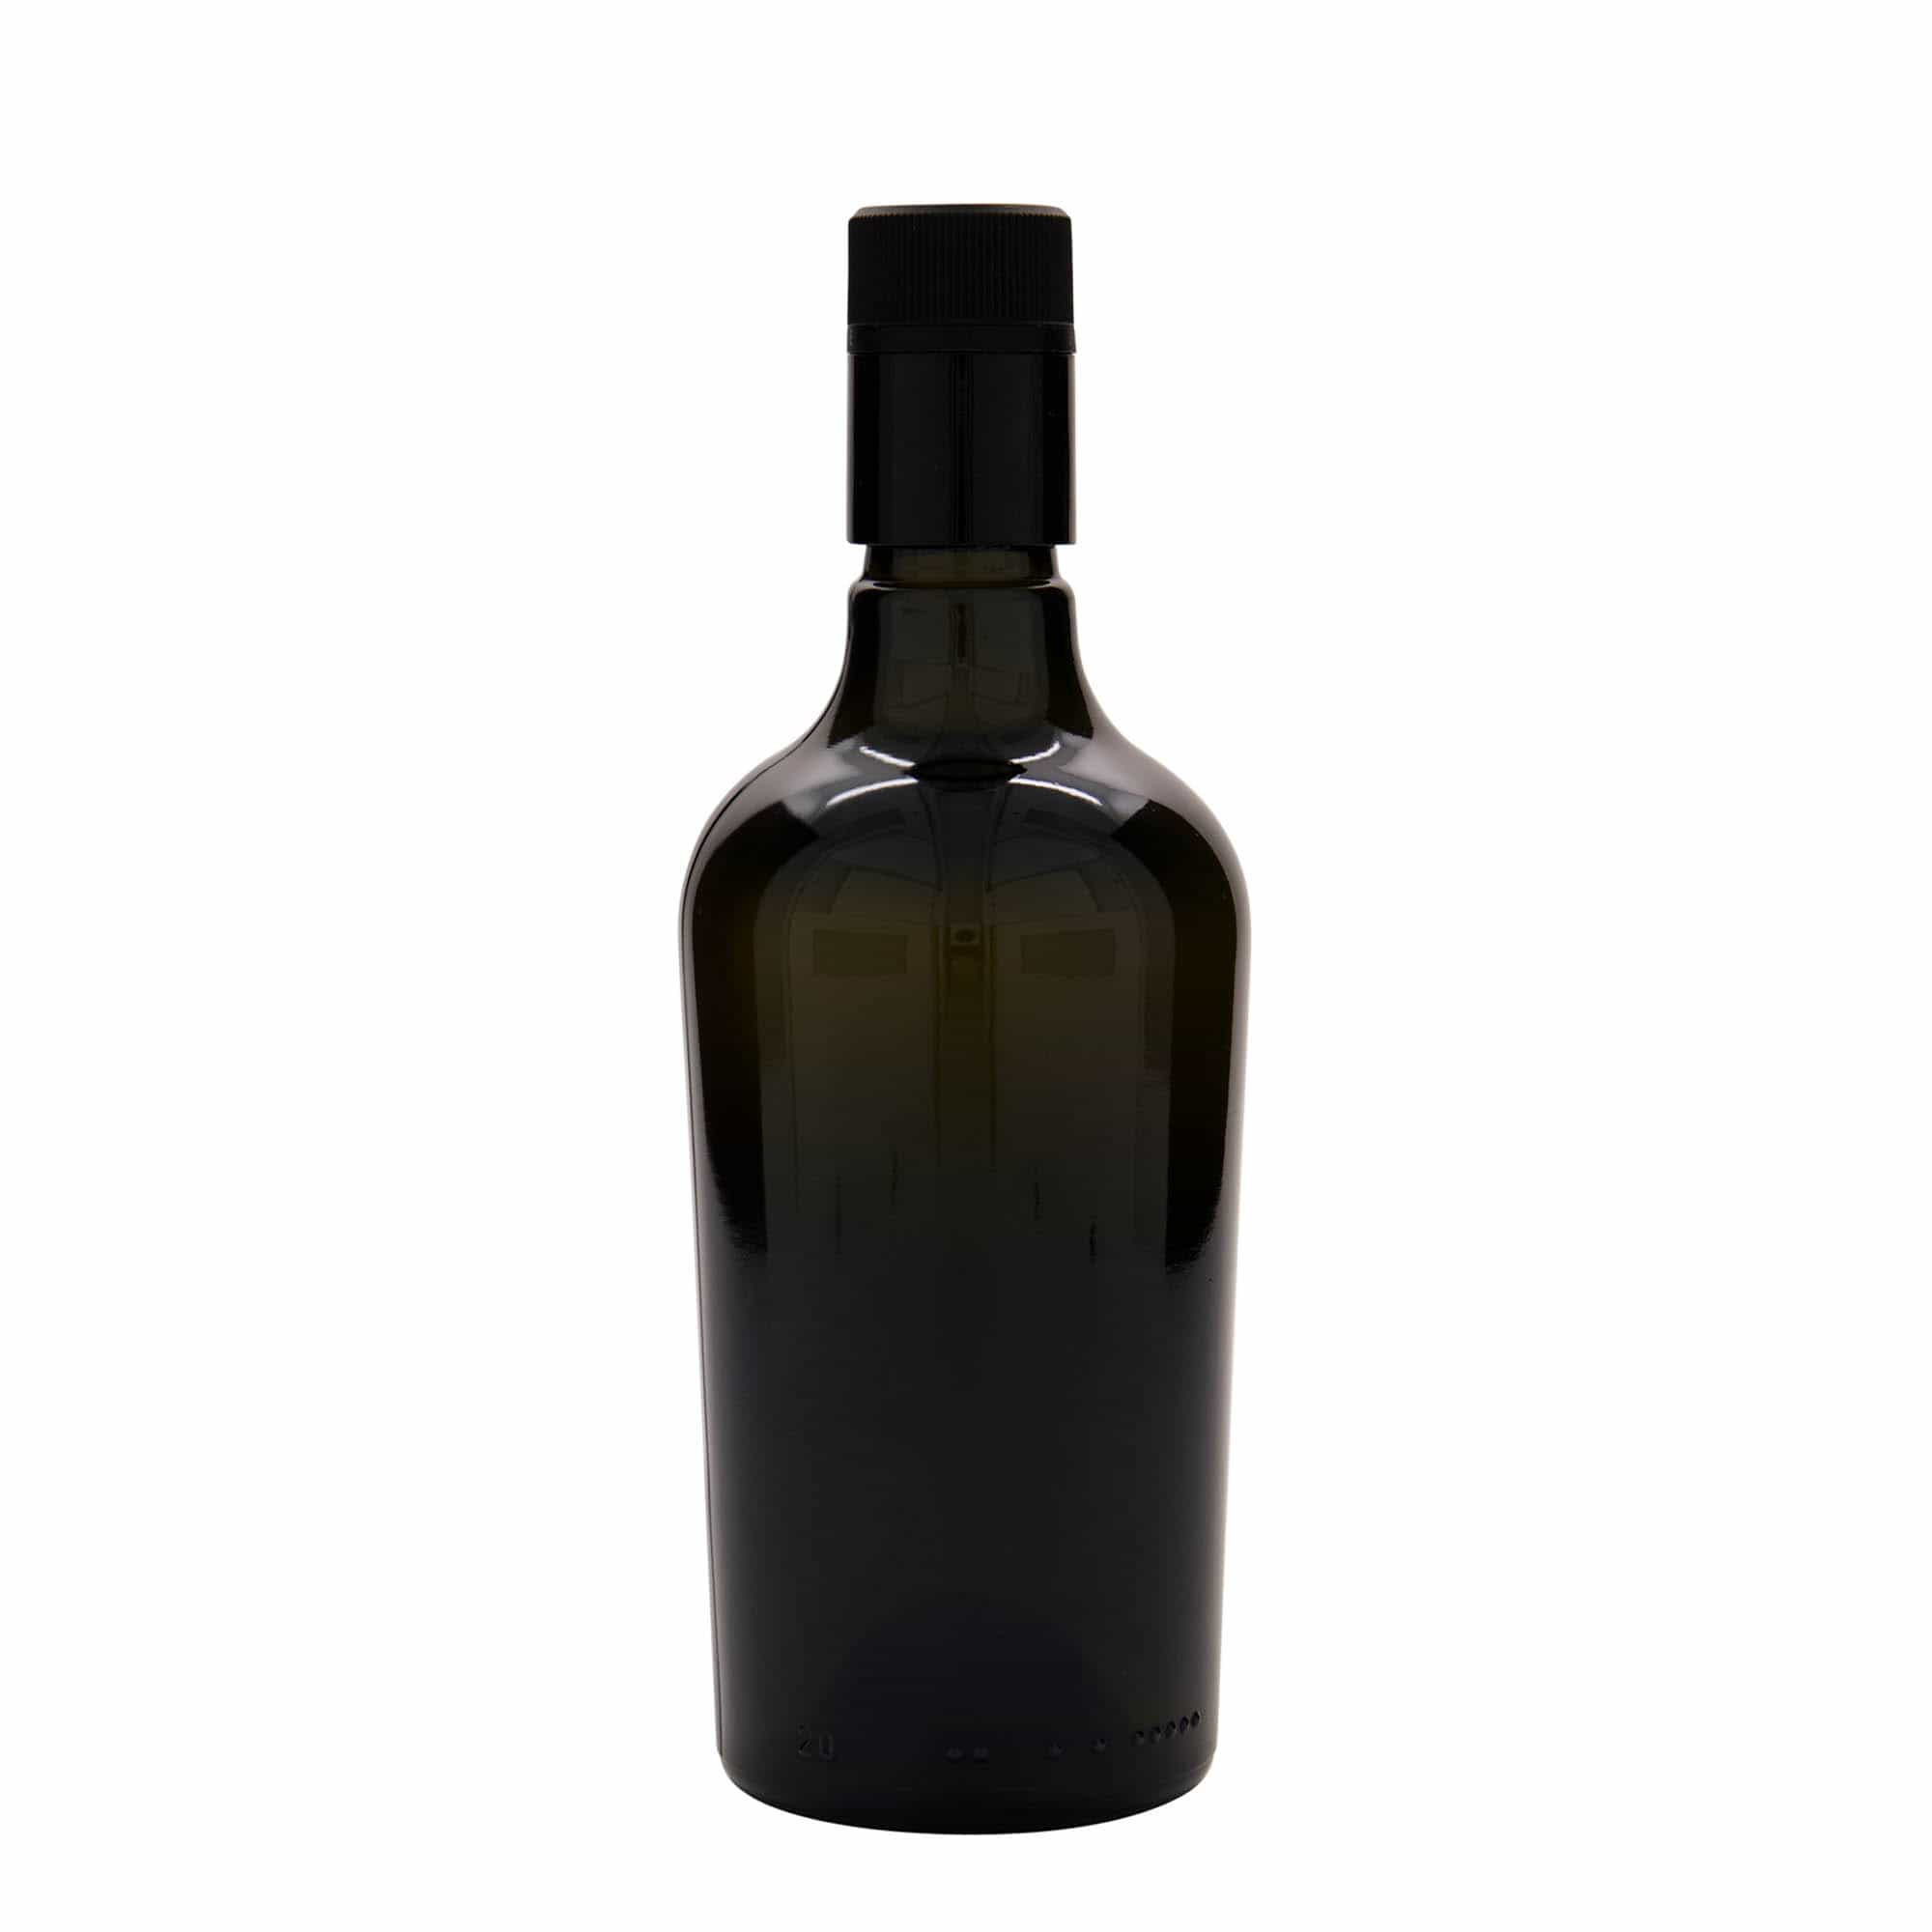 500 ml etikka-/öljypullo 'Oleum', lasi, antiikinvihreä, suu: DOP